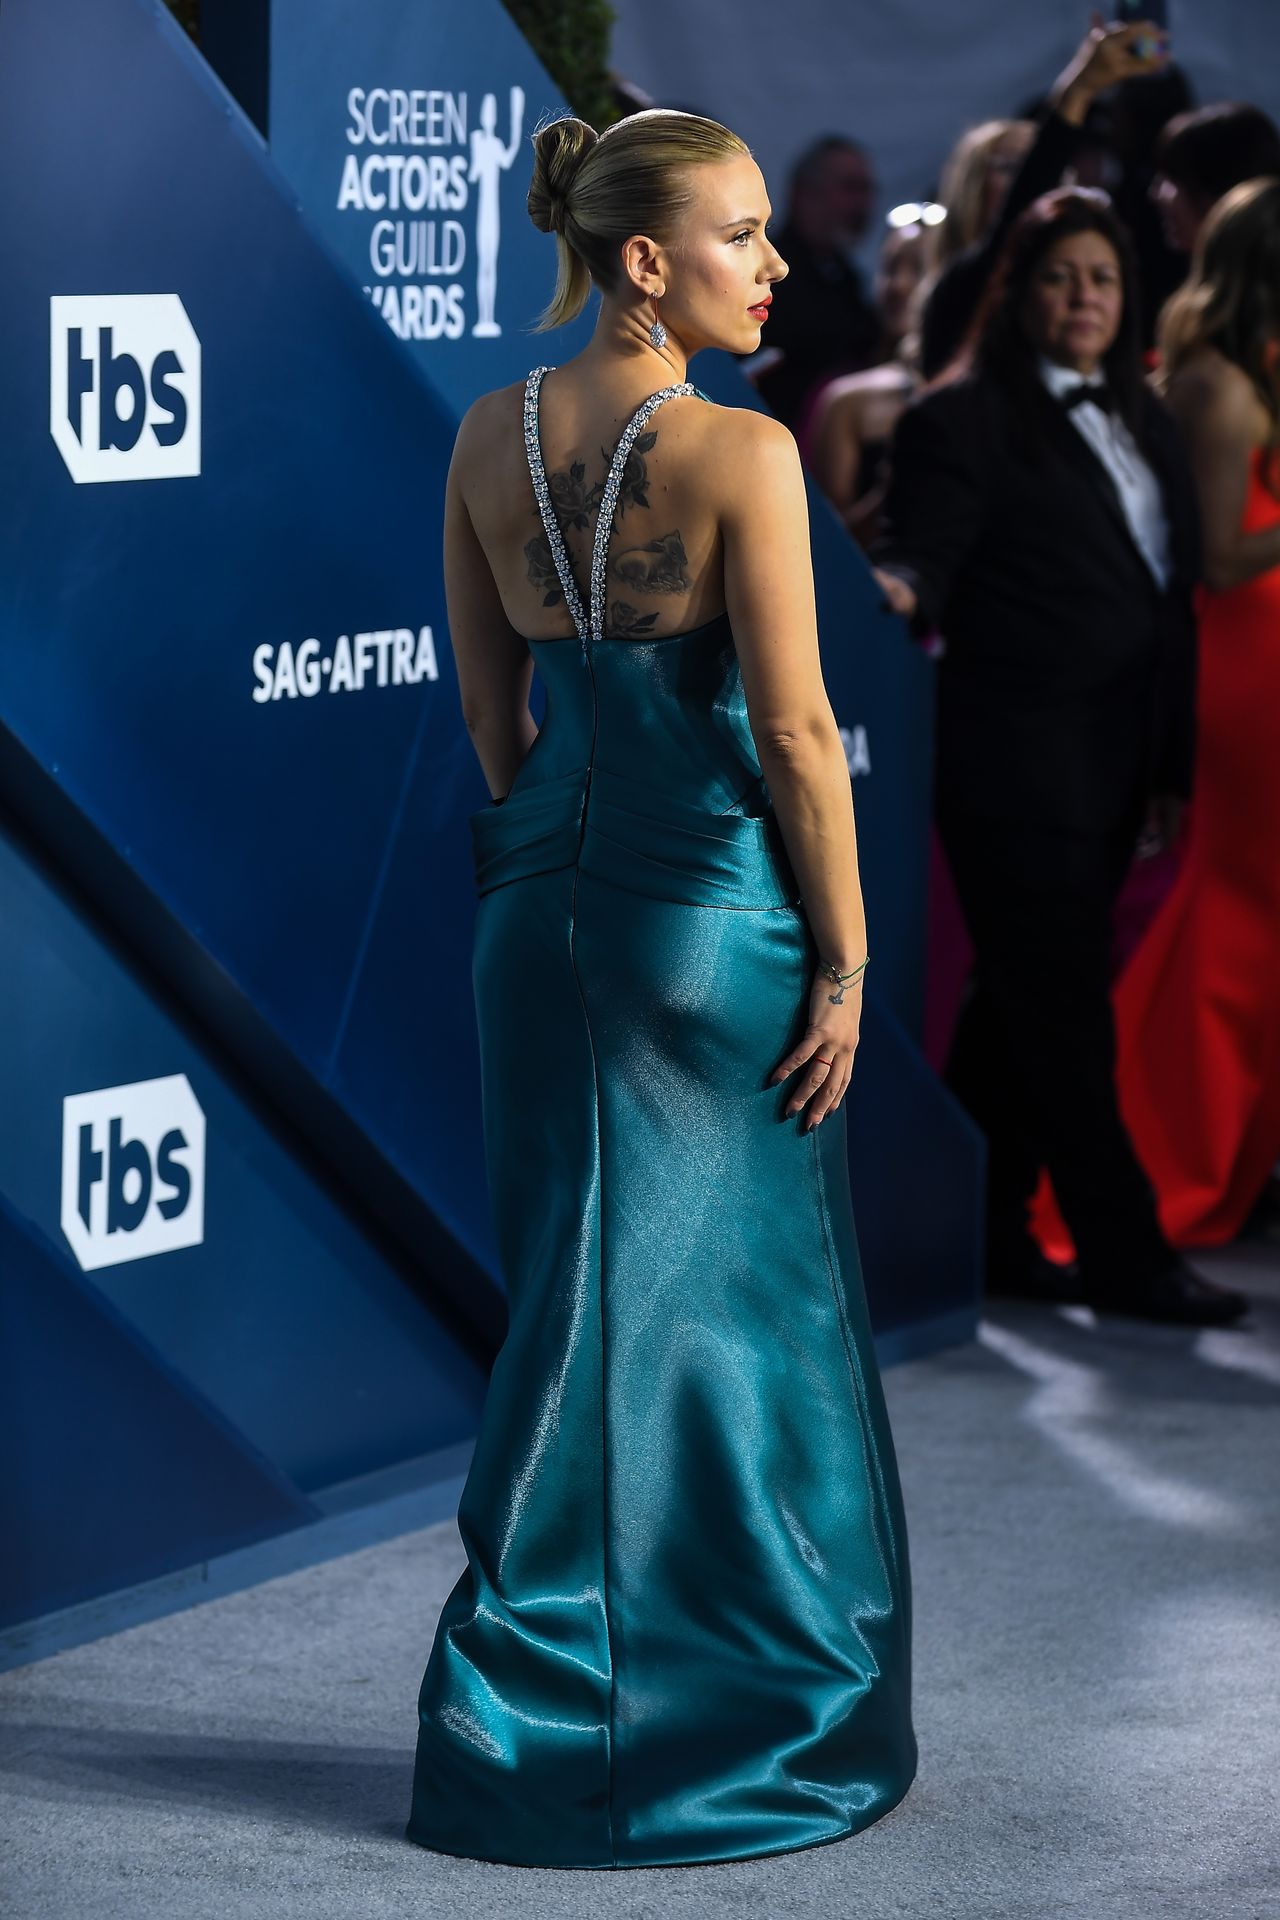 Scarlett Johansson Looks Stunning At The Sag Awards 0121